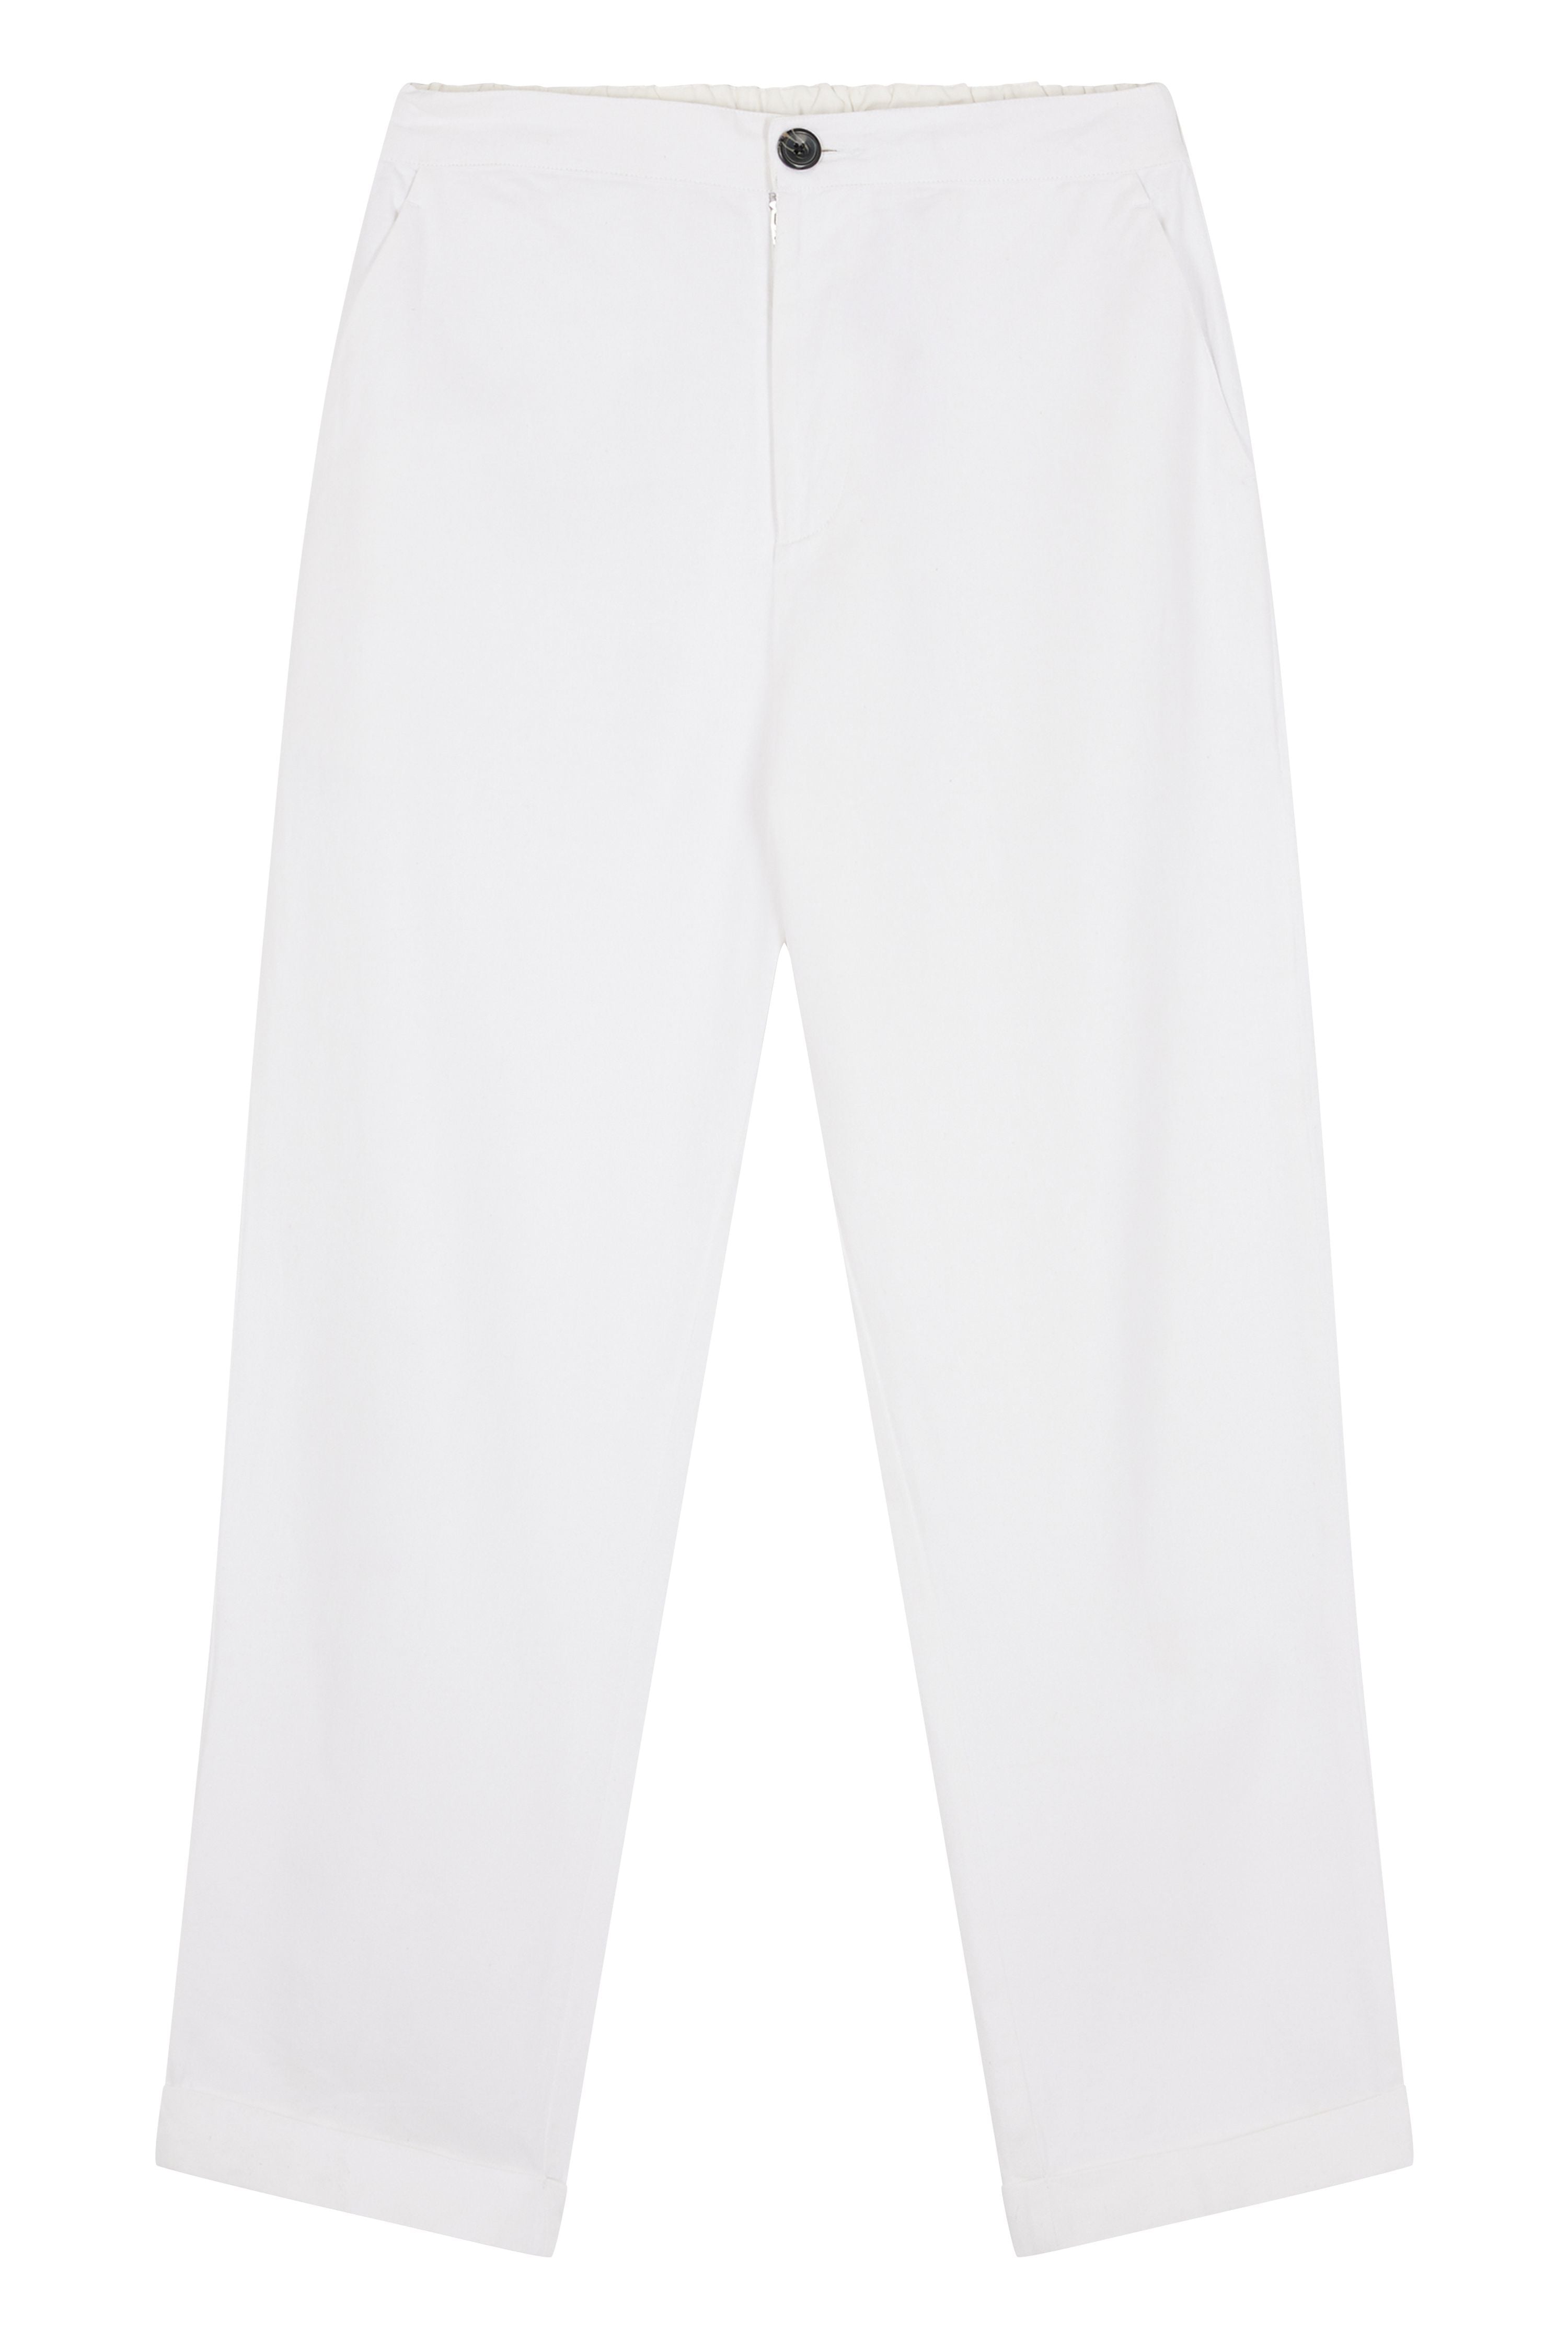 Pantalon Pol Blanc (6911550029887)